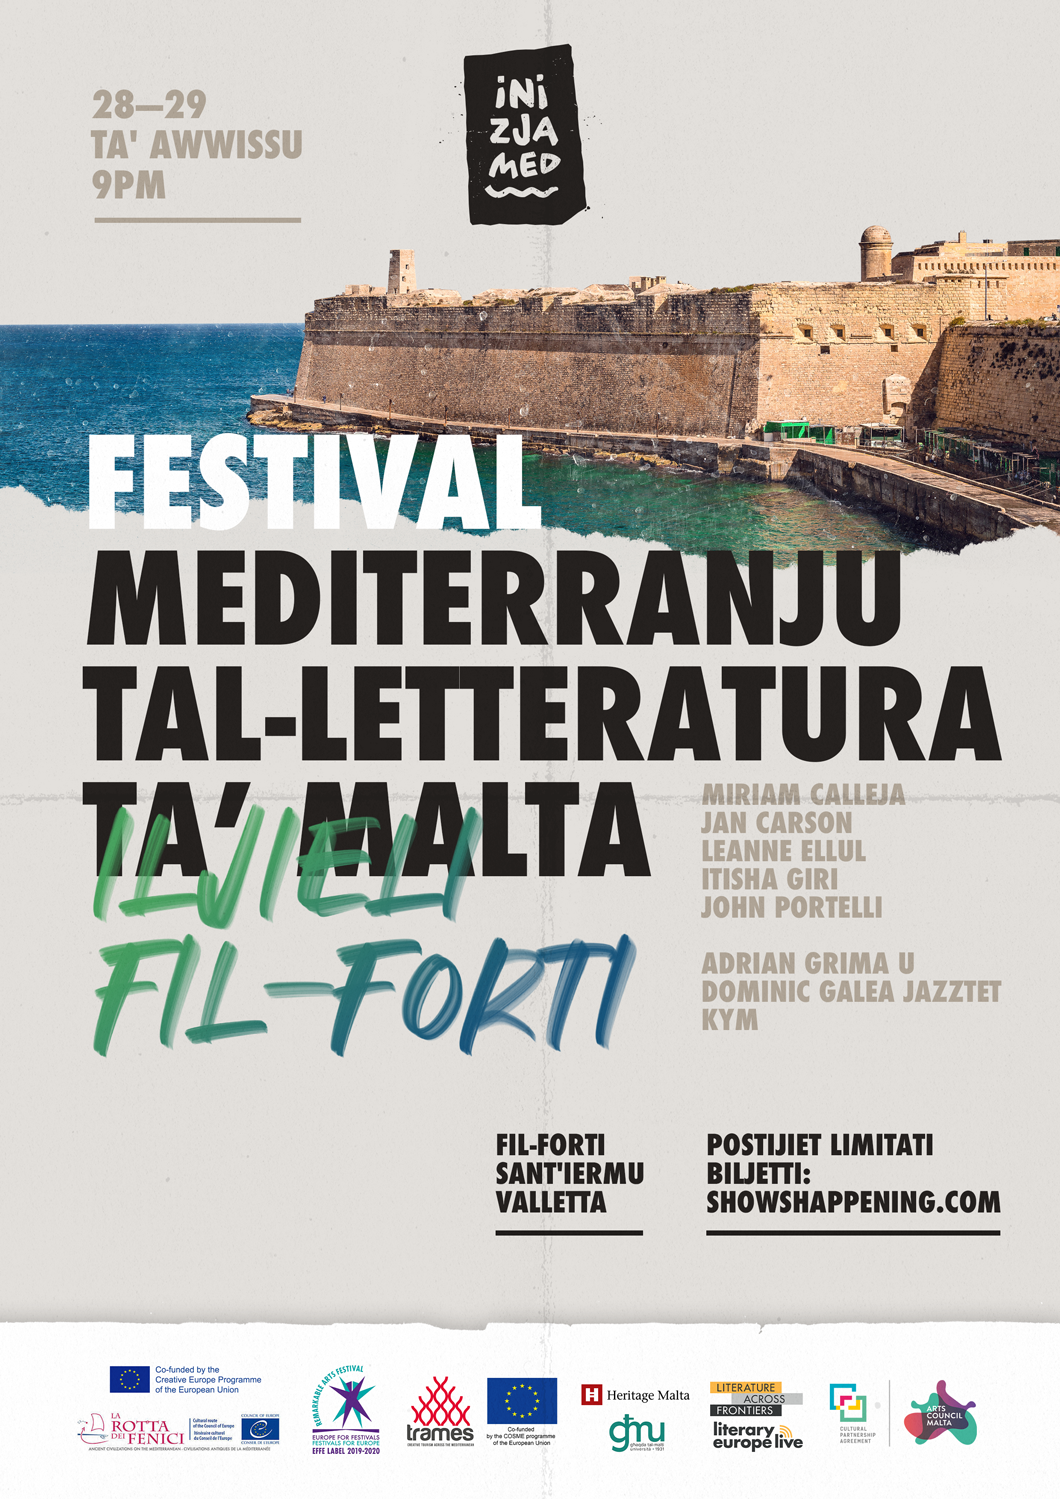 Festival Mediterranju tal-Letteratura poster